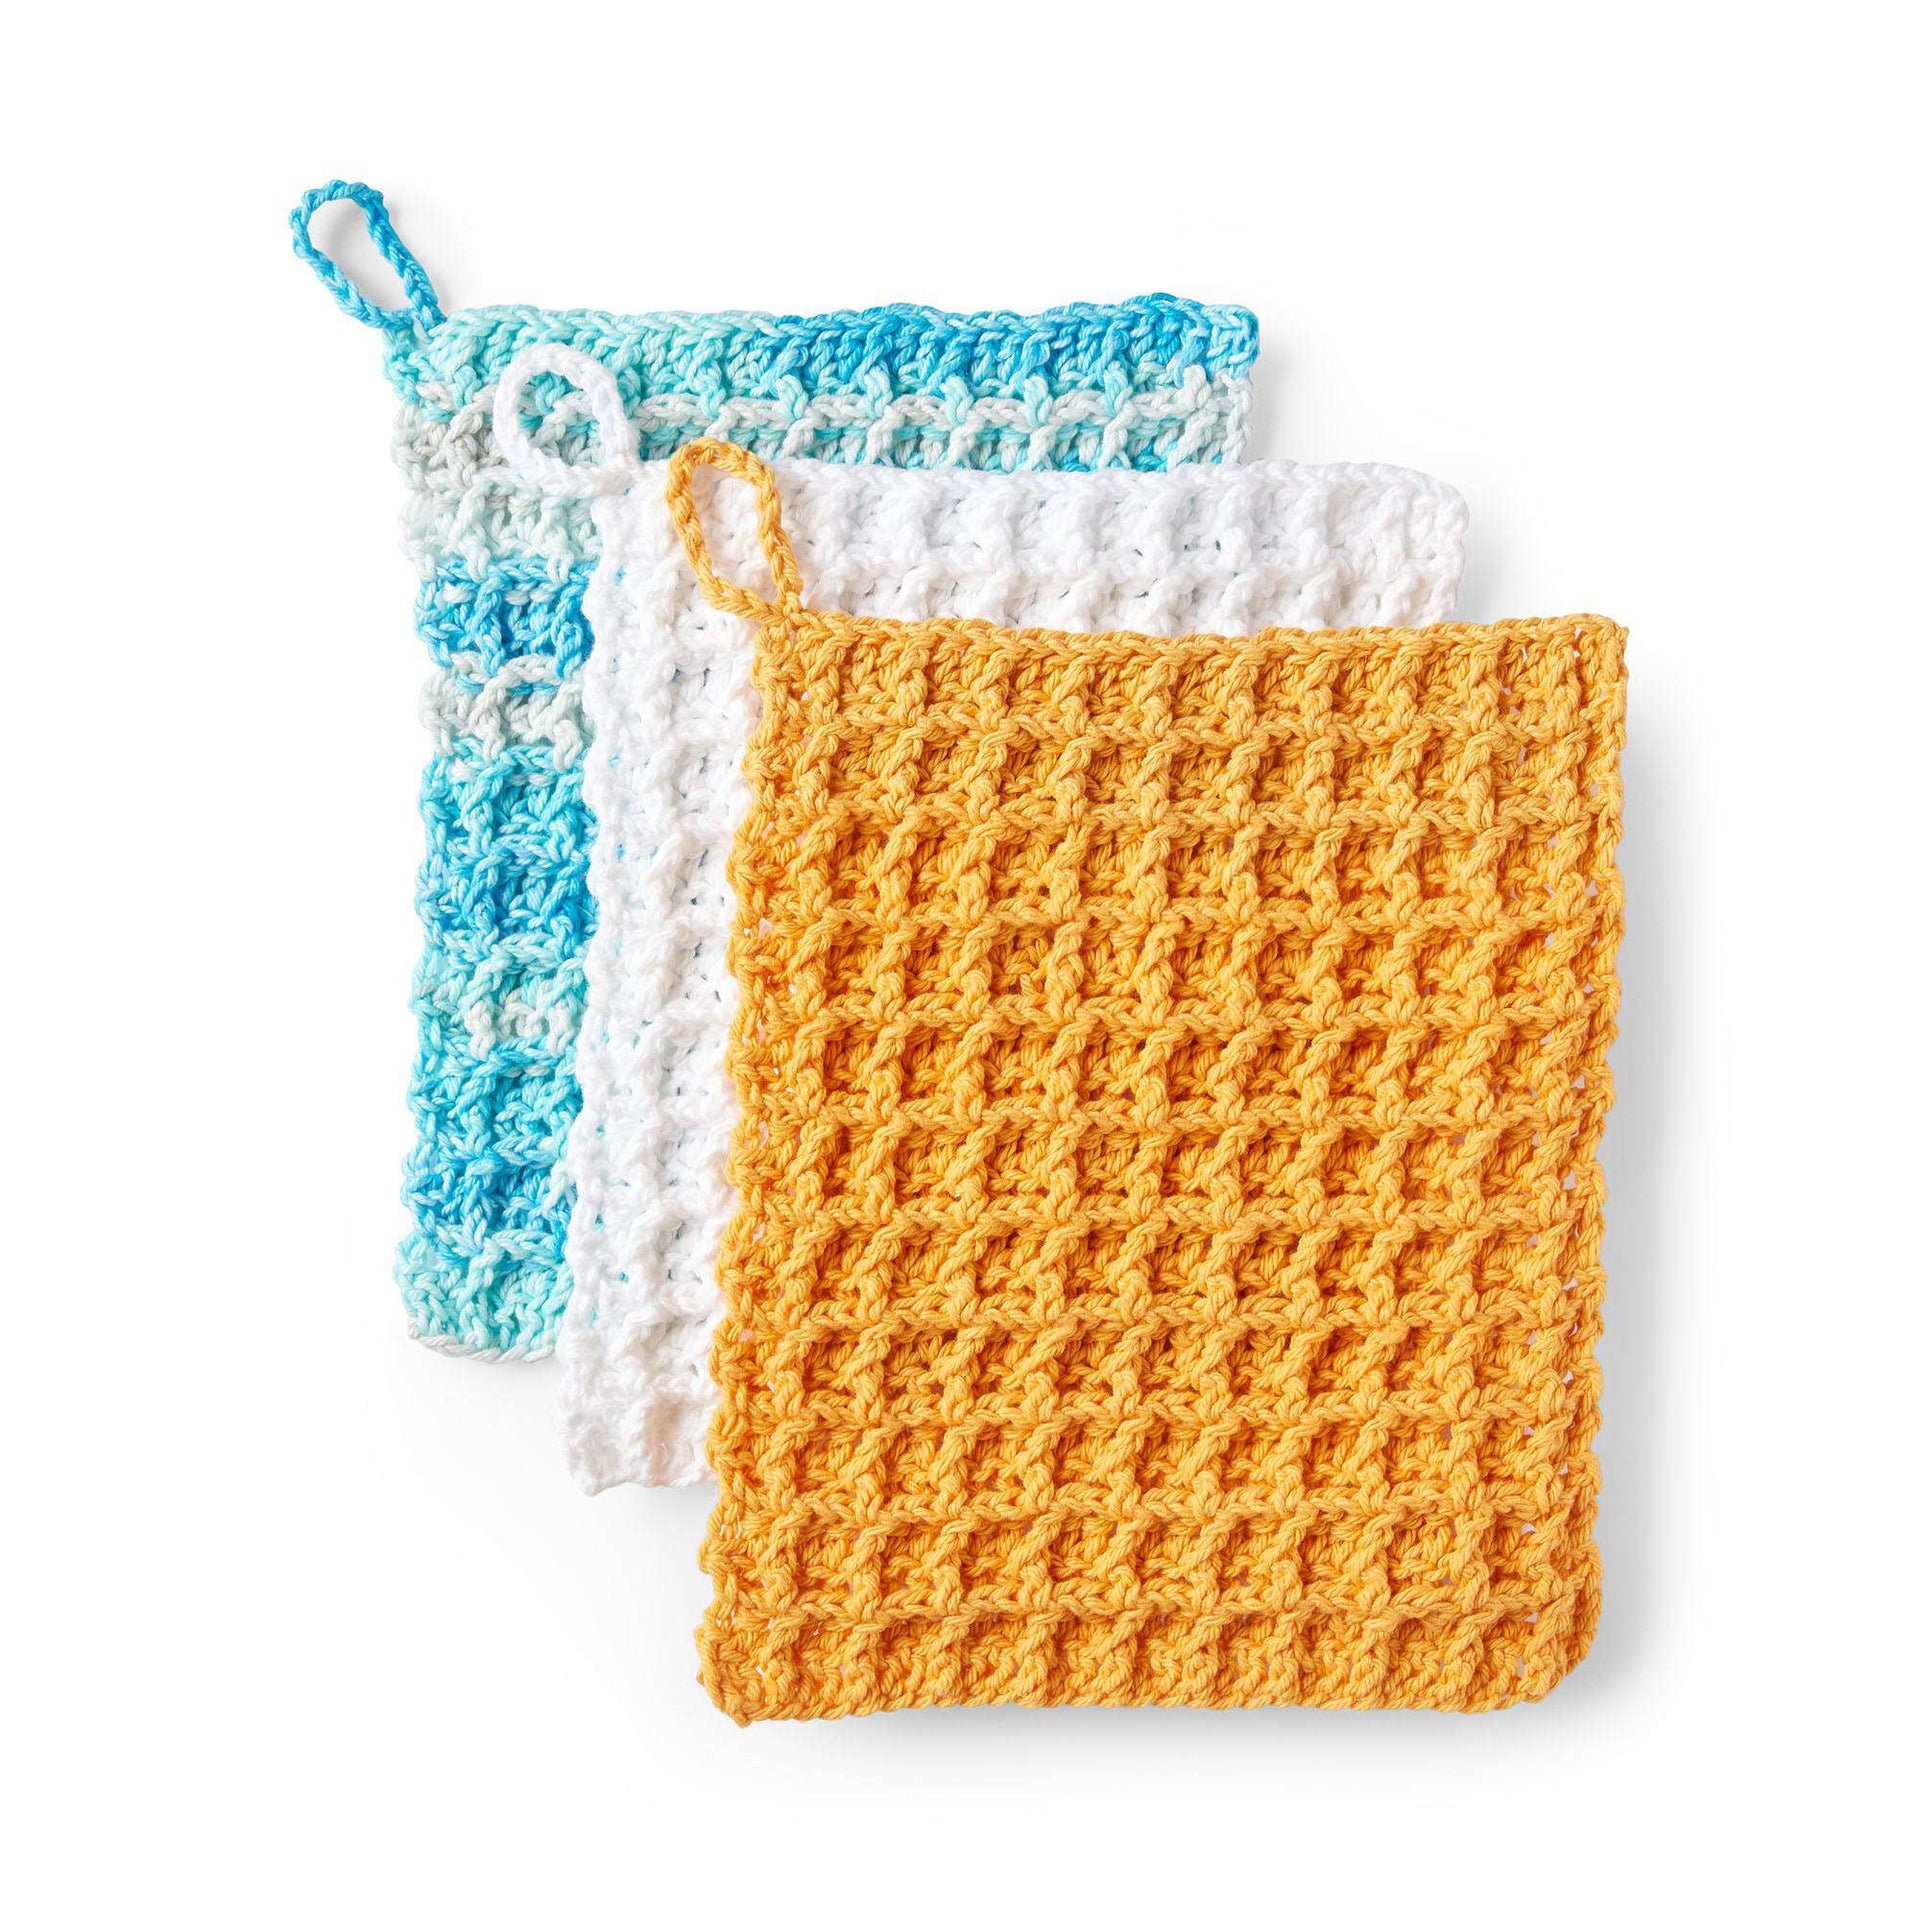 Crochet Cotton Dishcloth - Peaches and Cream - Daniel Art and Yarn